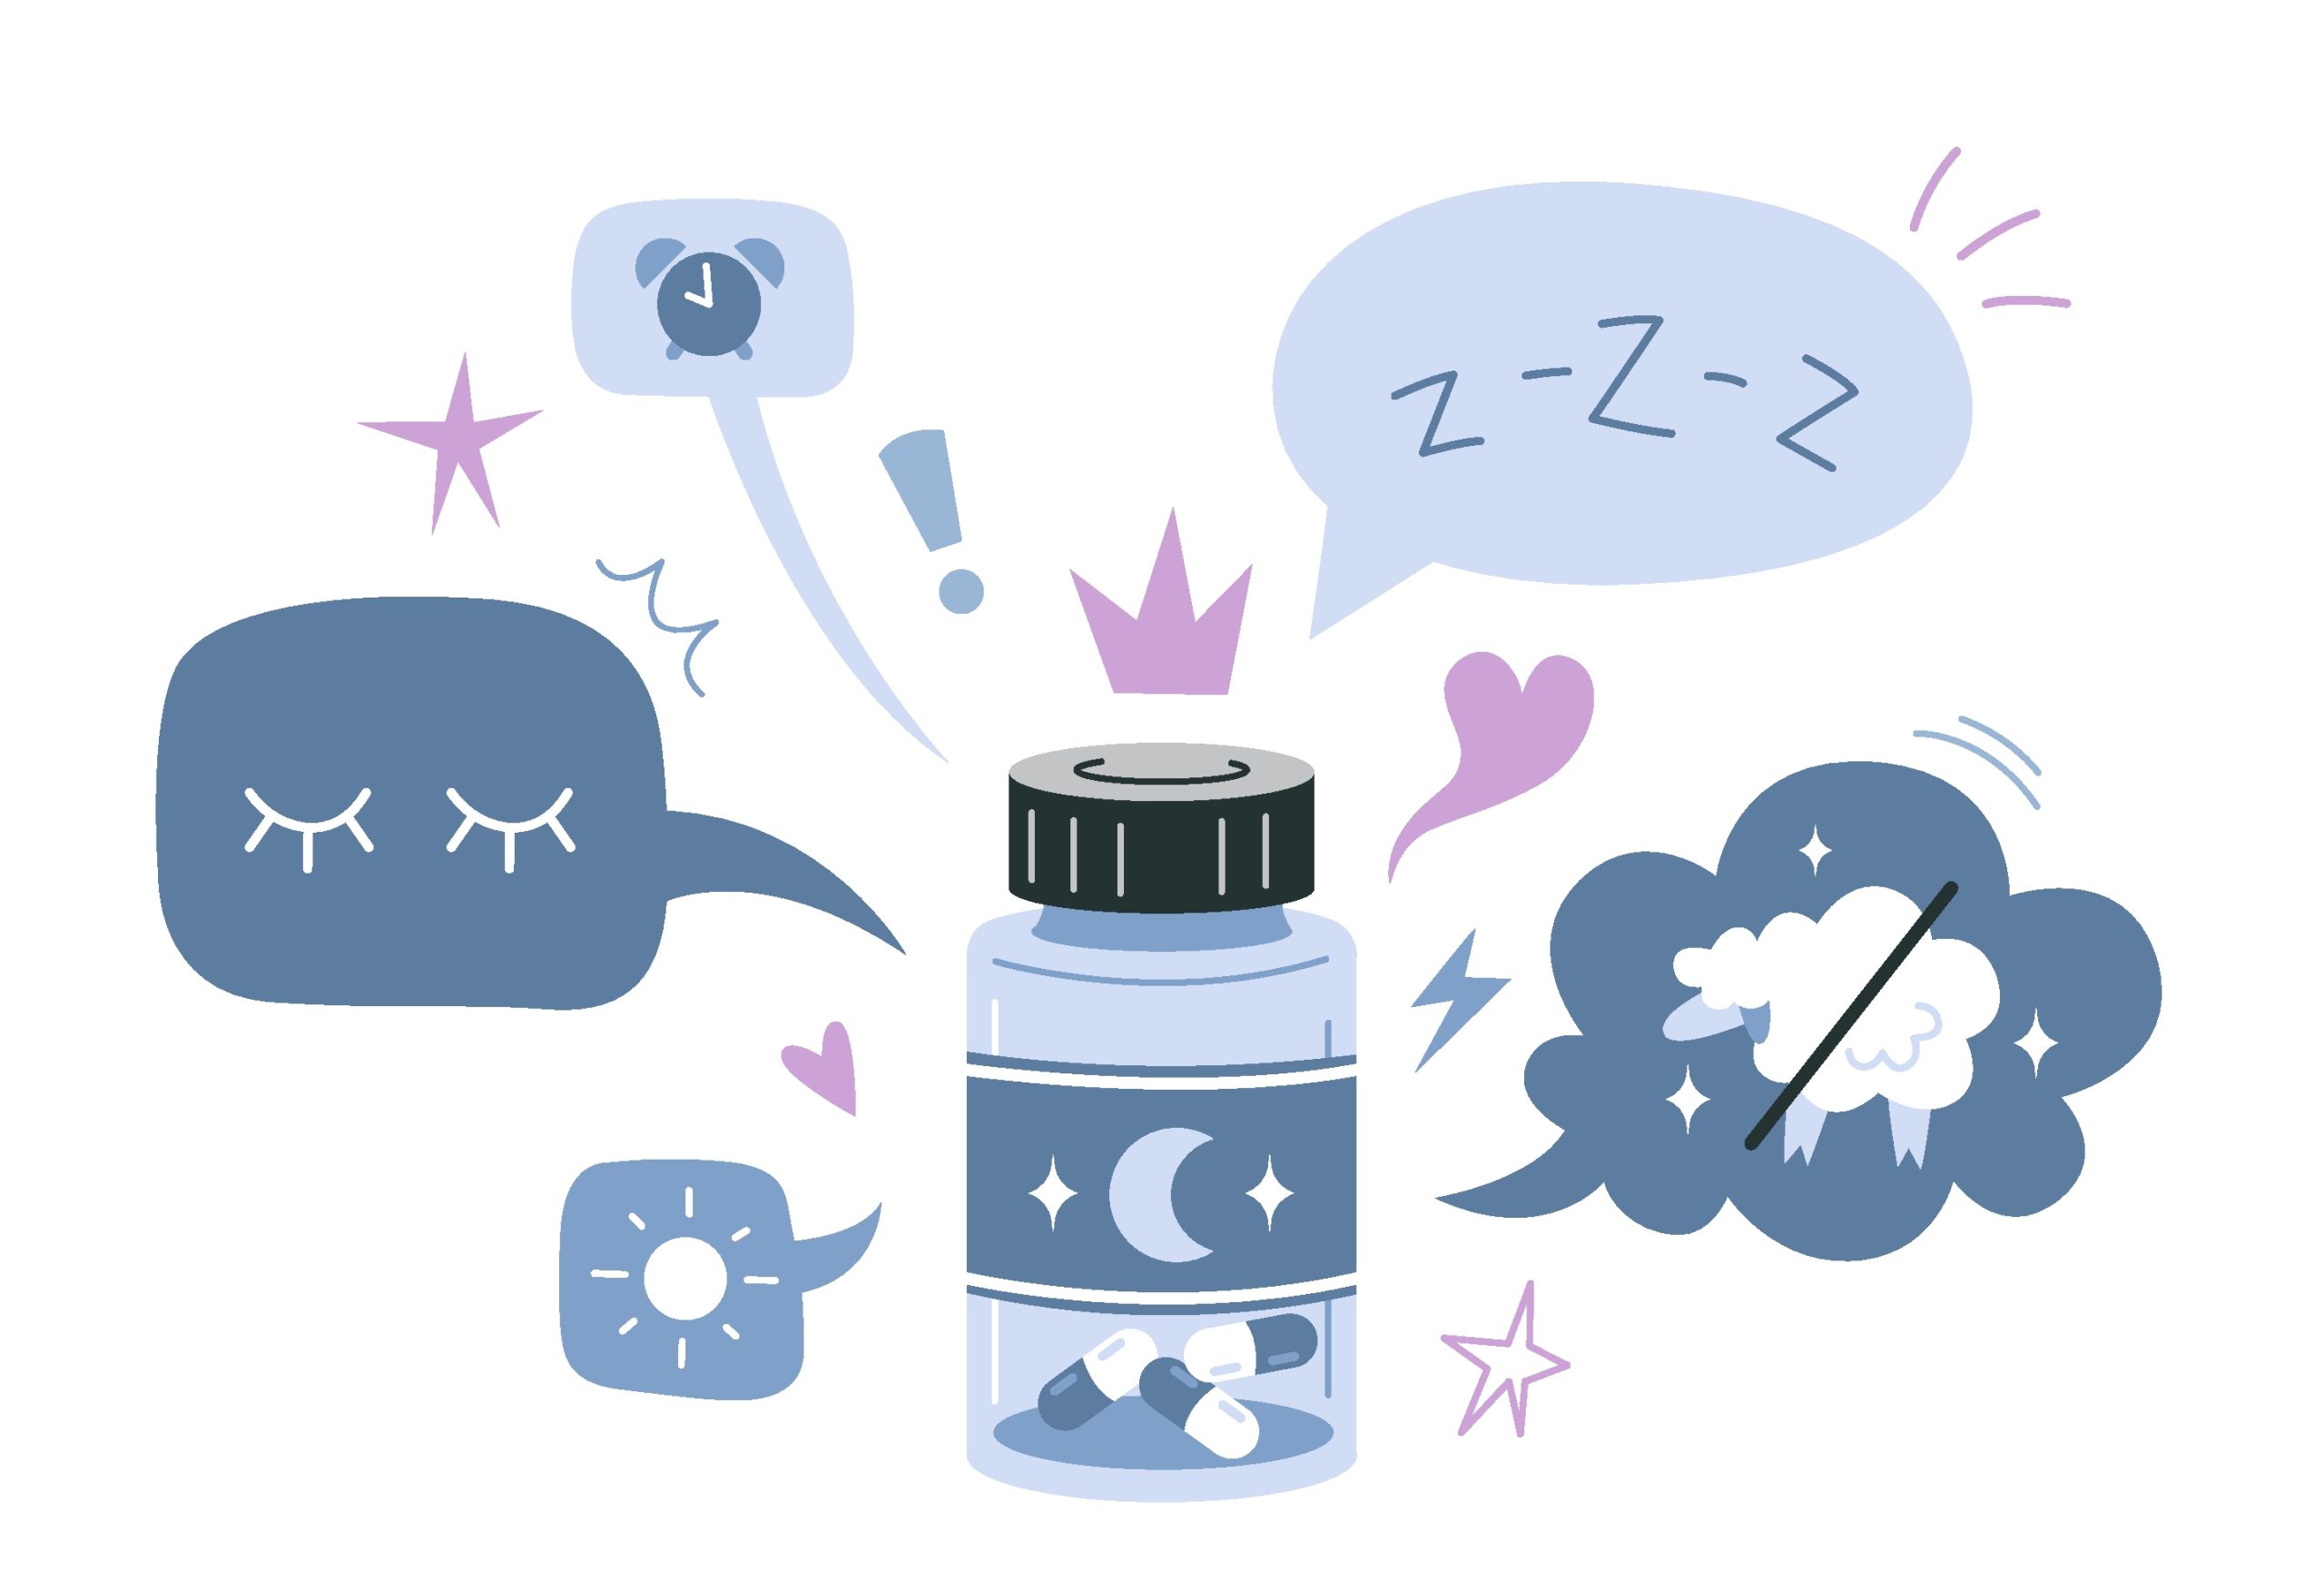 Marvelous melatonin helps you sleep, age slower, and avoid disease